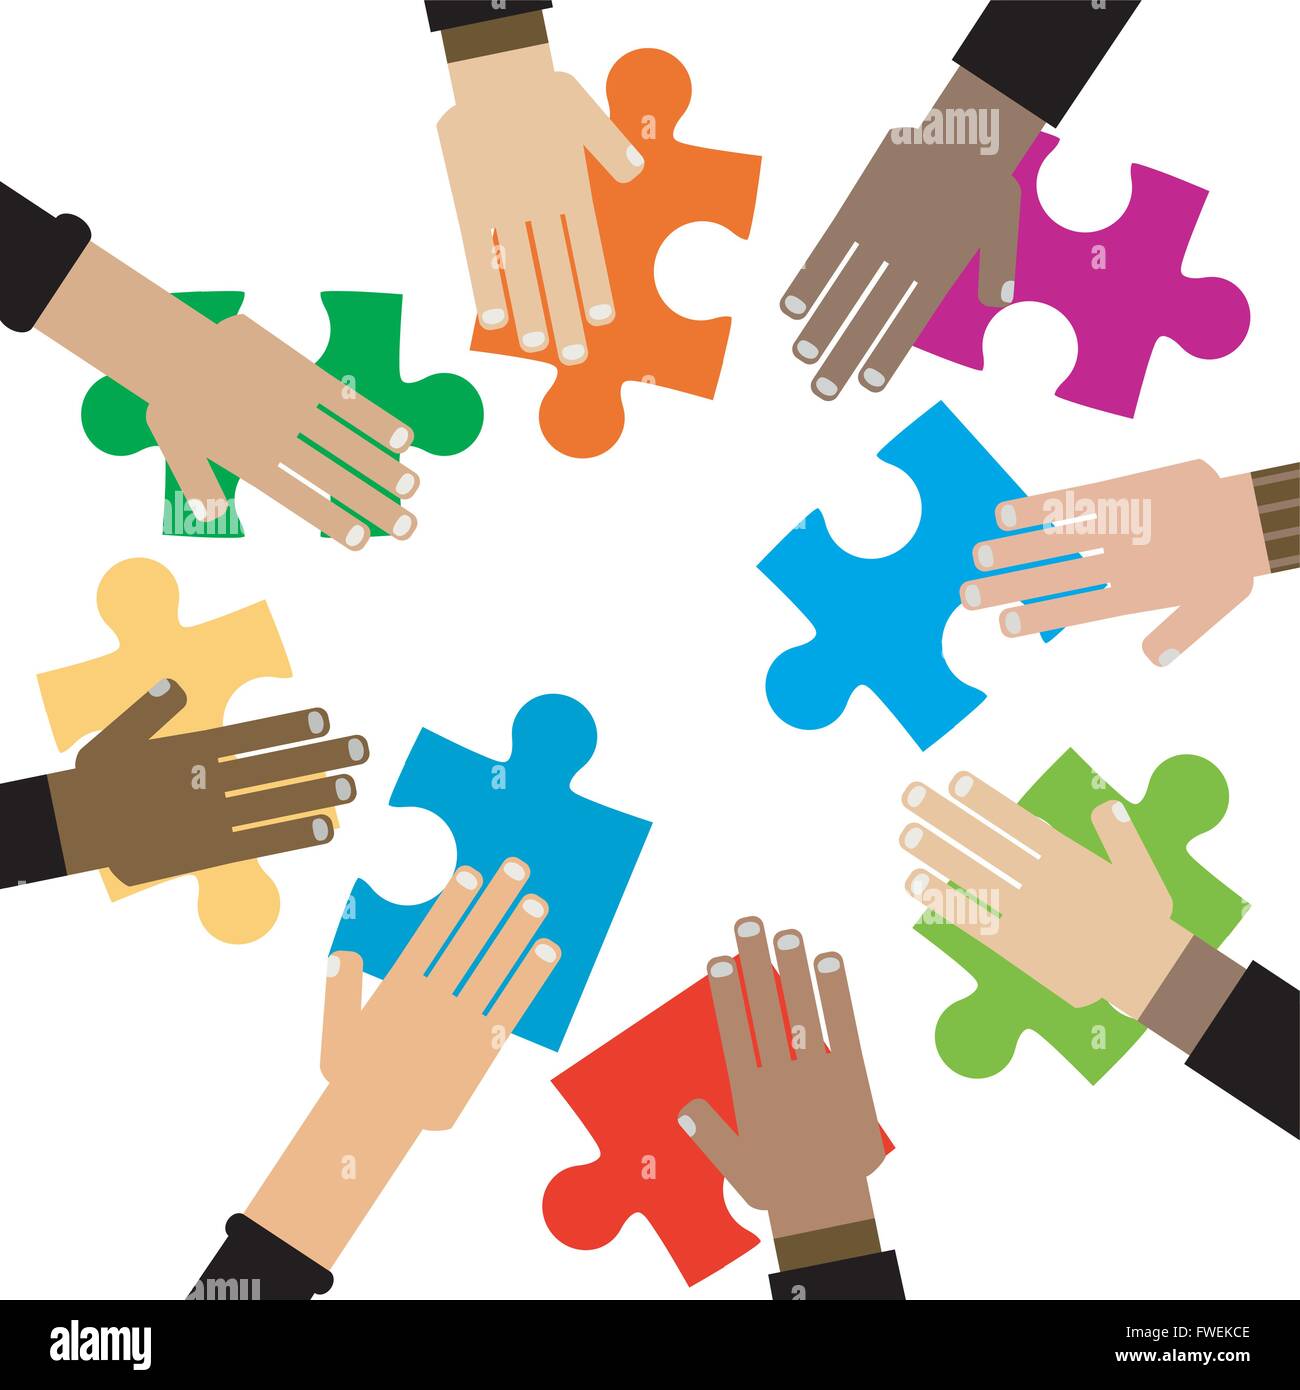 diversity hands puzzle illustration Stock Vector